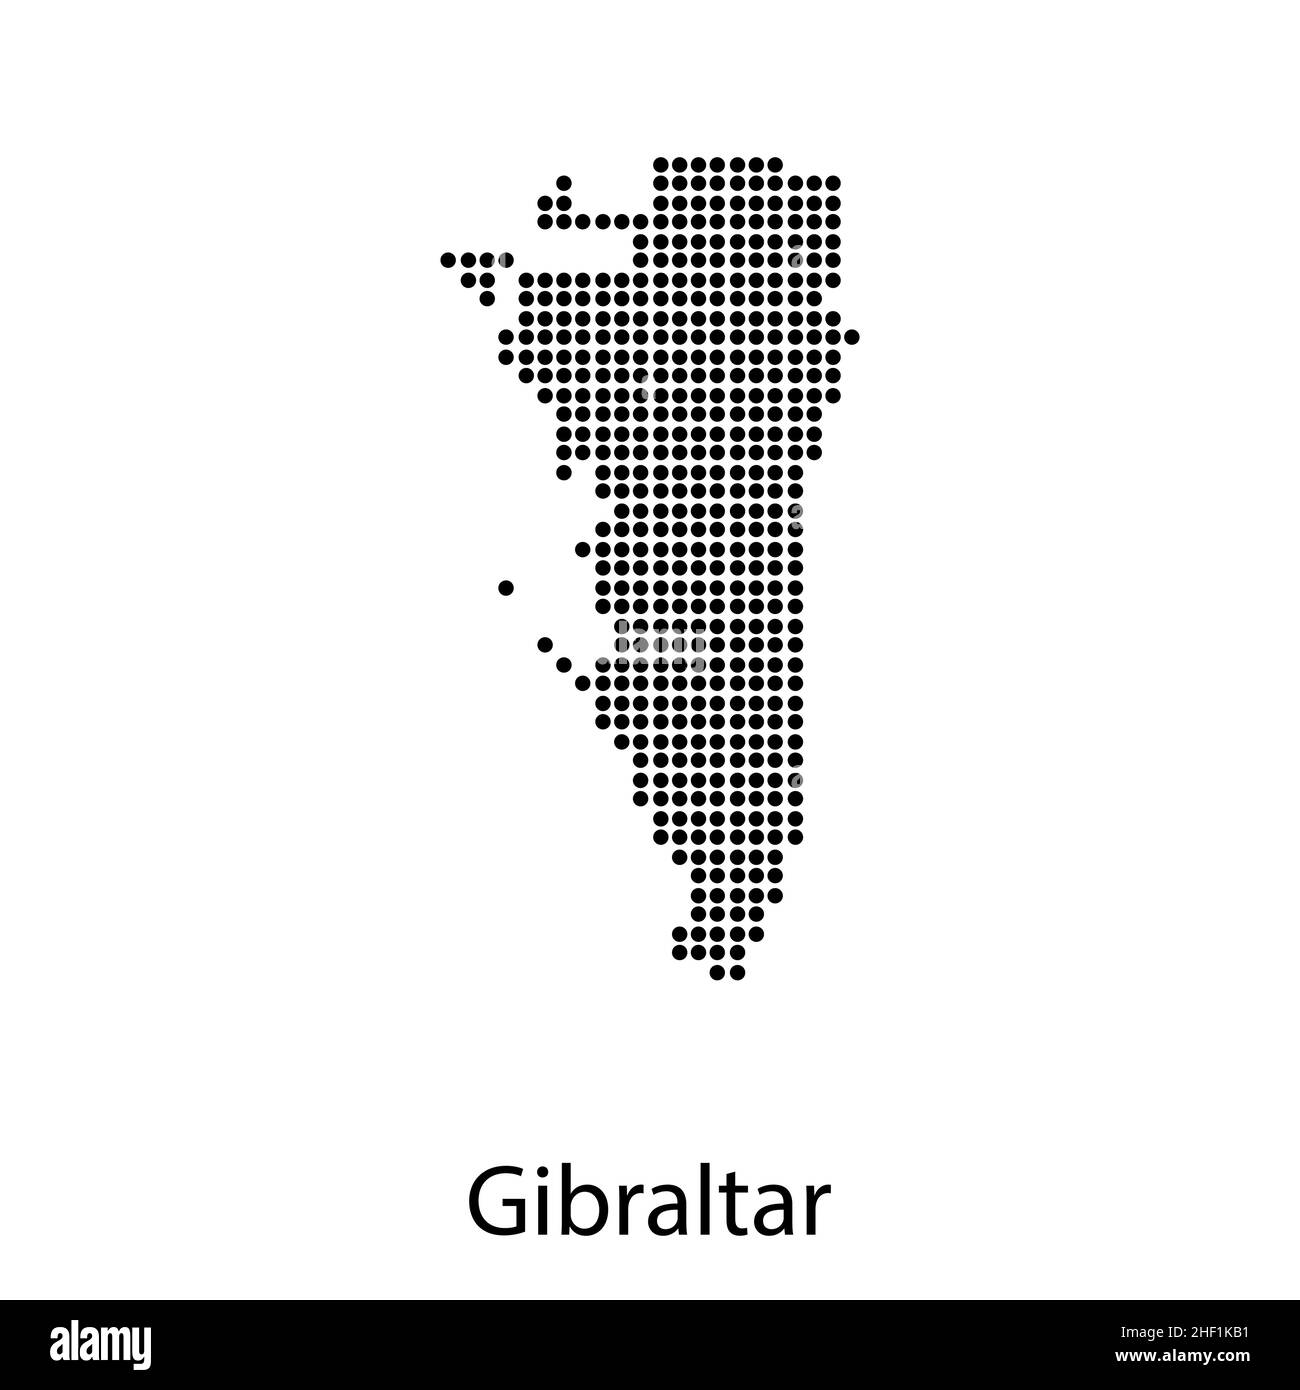 Vektorkarte-gibraltar Land auf weißem Hintergrund. vektorgrafik Stock Vektor